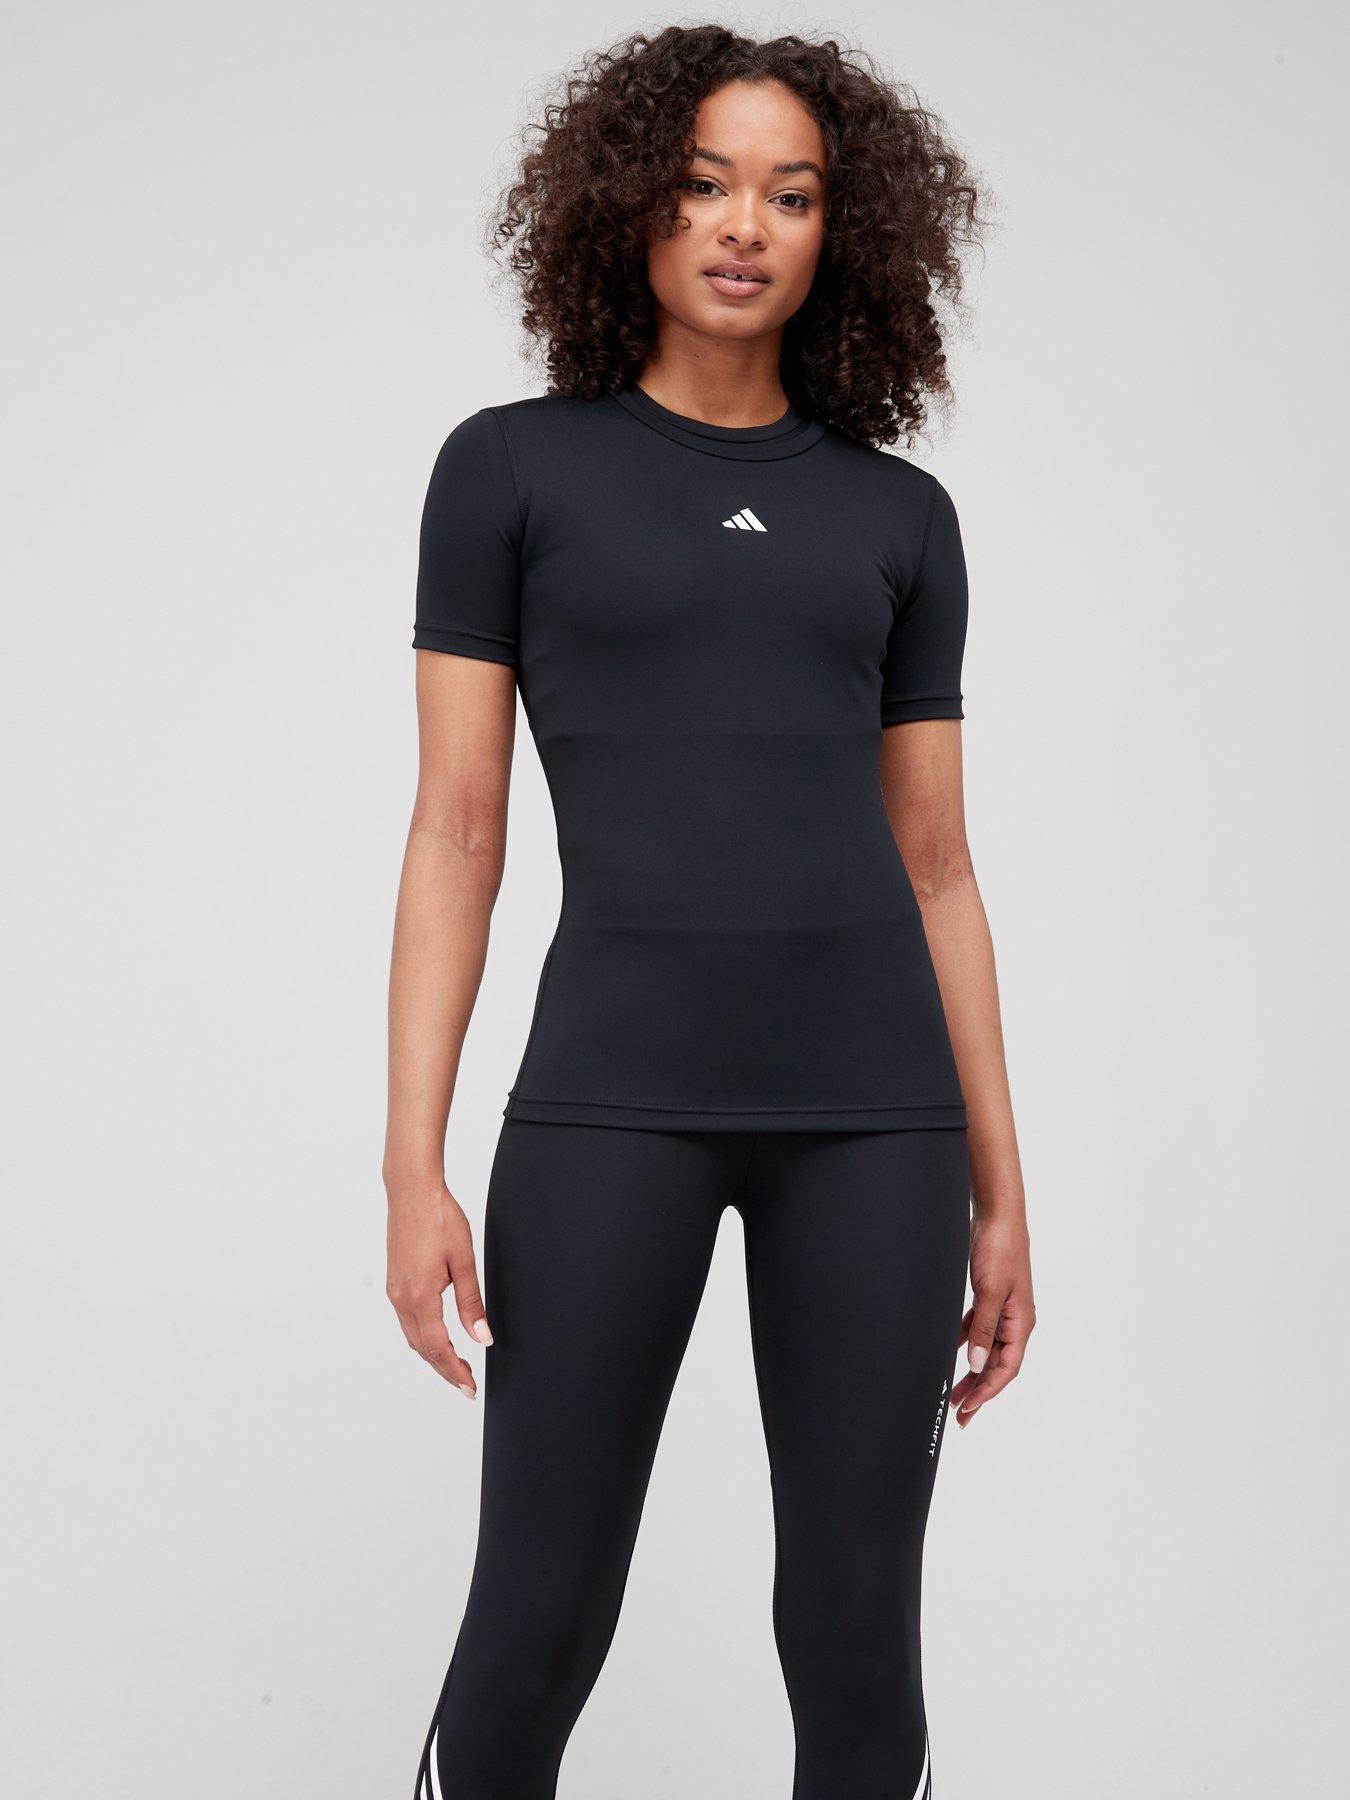 adidas Women's Performance Techfit Training T-shirt - BLACK/WHITE